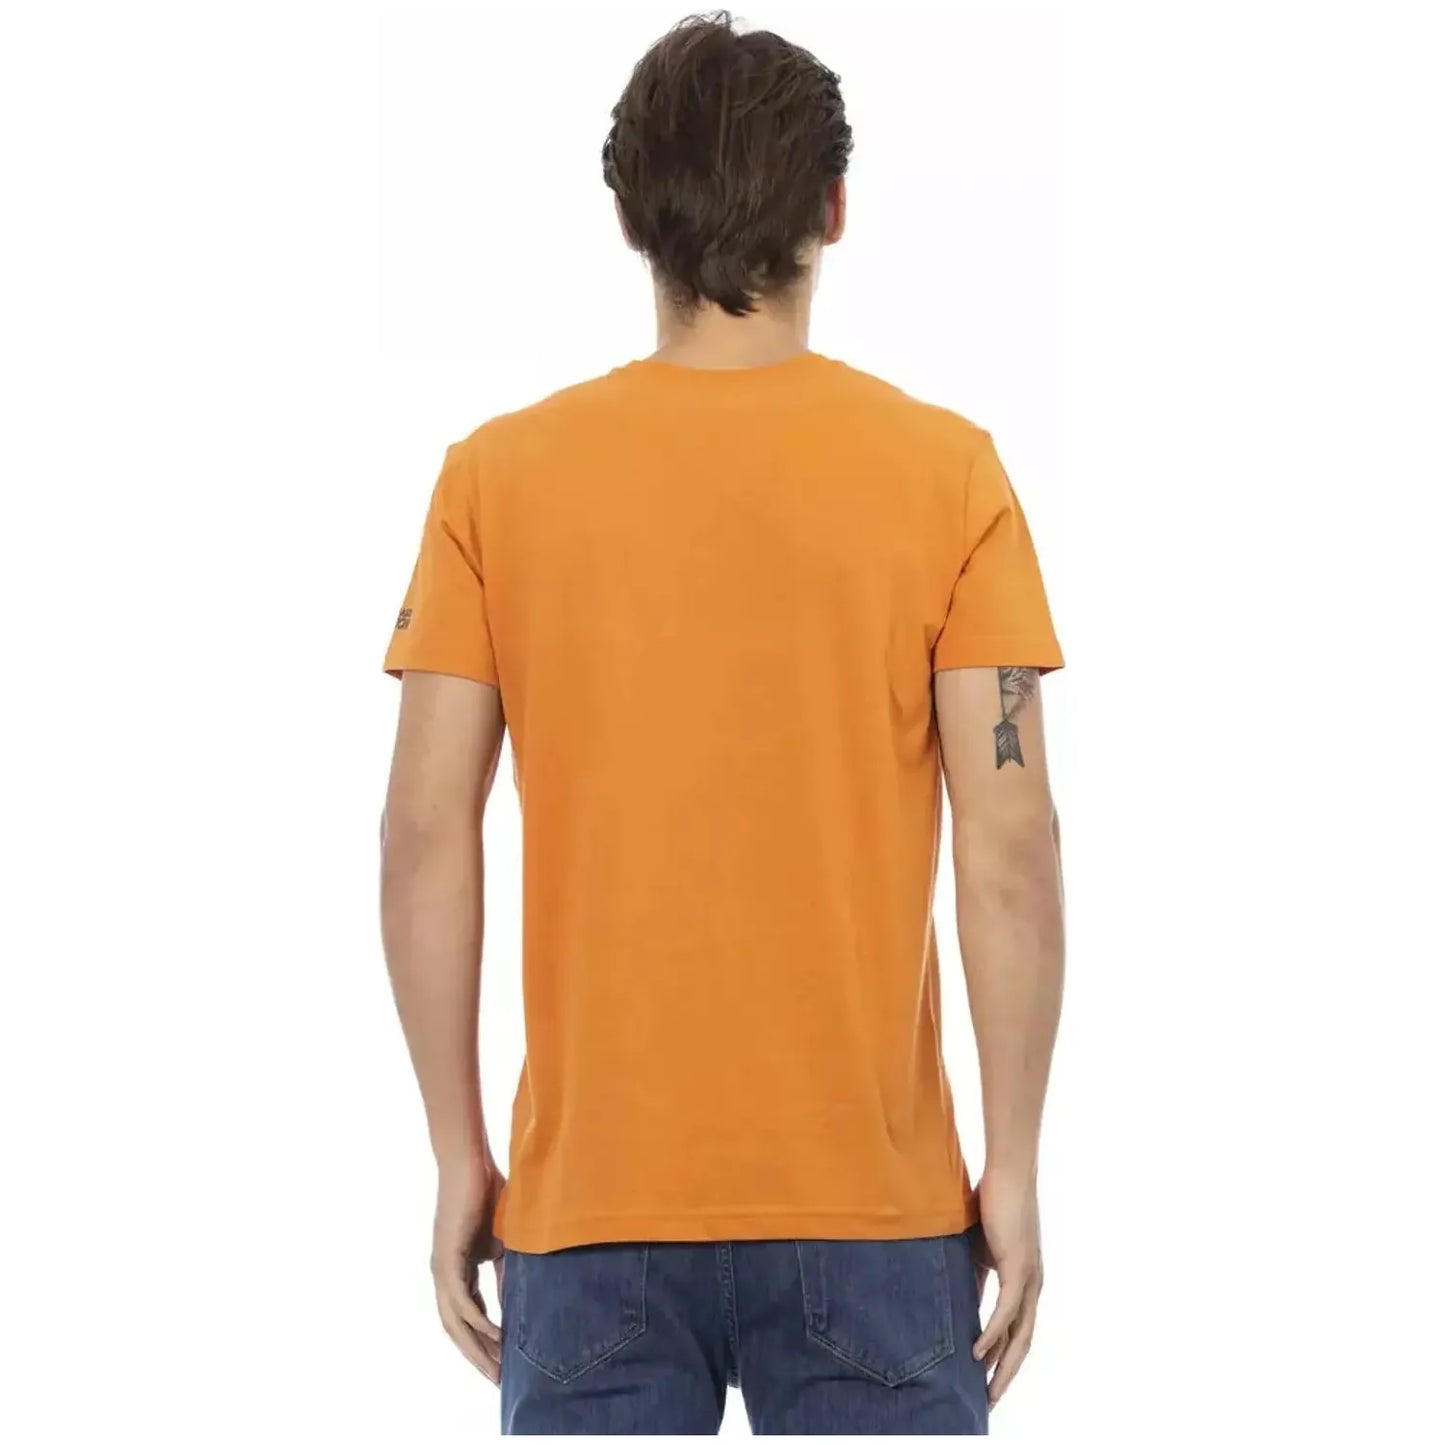 Trussardi Action Vibrant Orange V-Neck Tee with Sleek Print orange-cotton-t-shirt-22